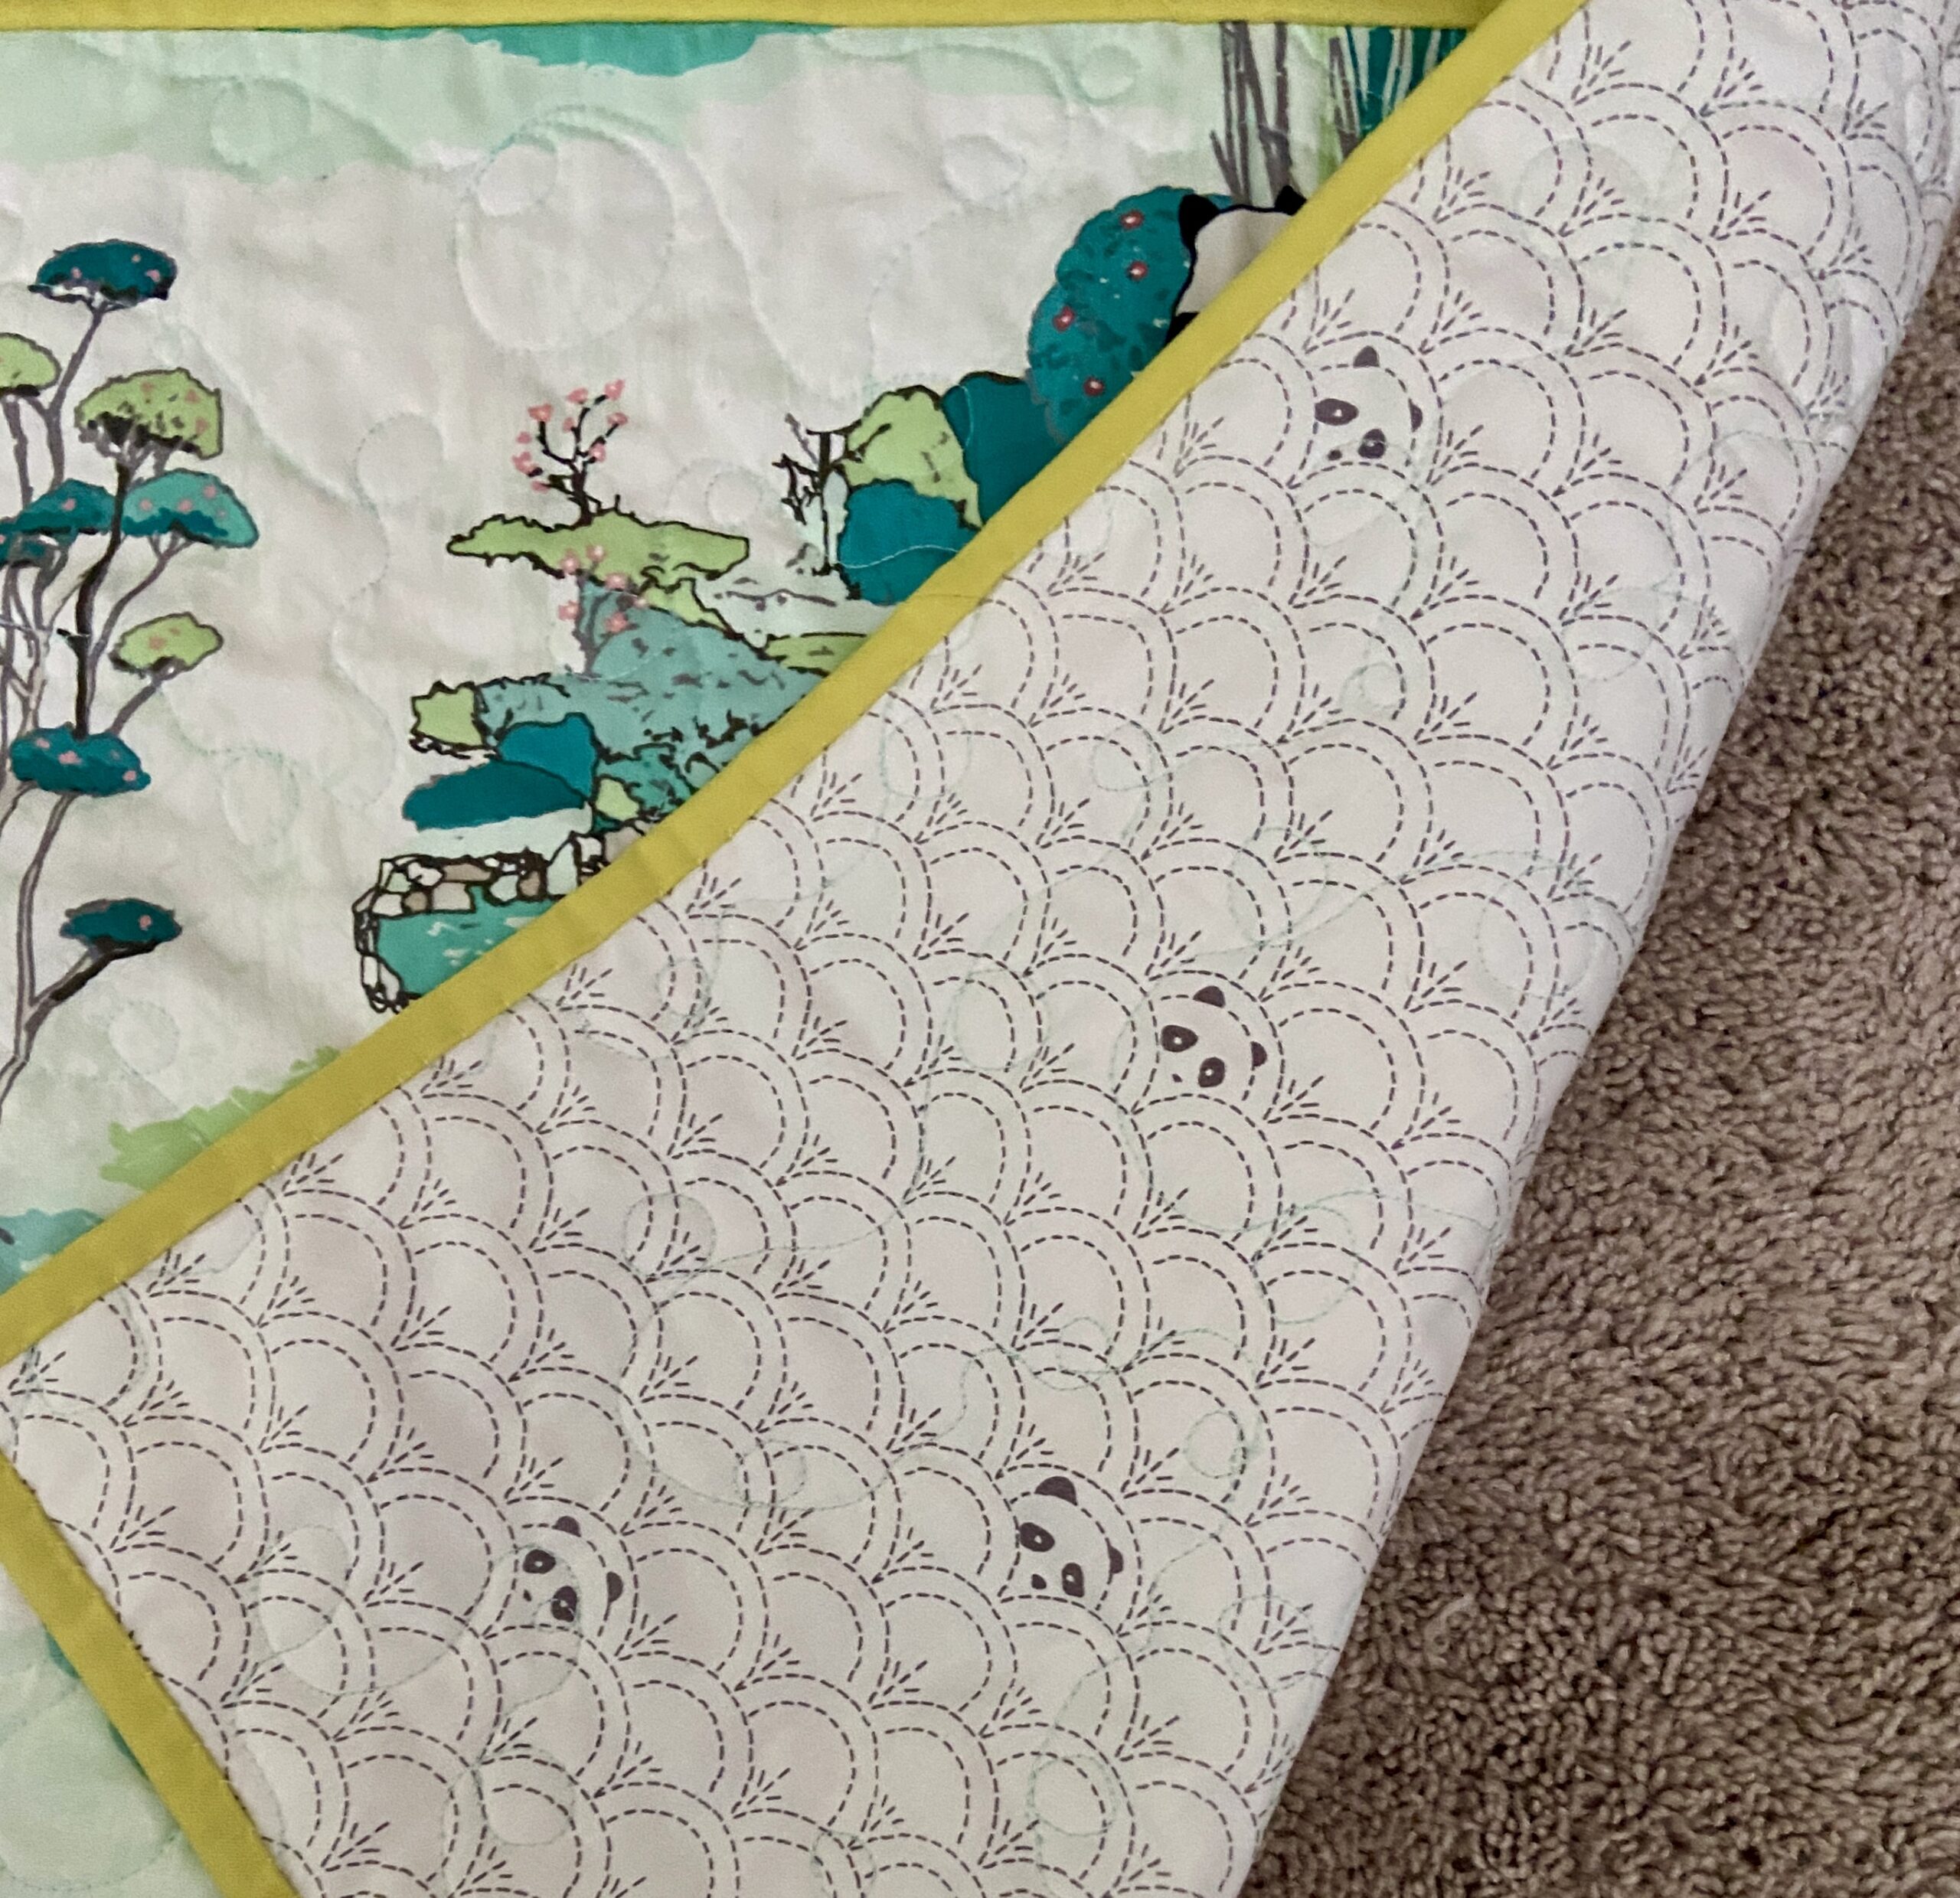 Fun Ways to Display Mini Quilts - Teadoddles